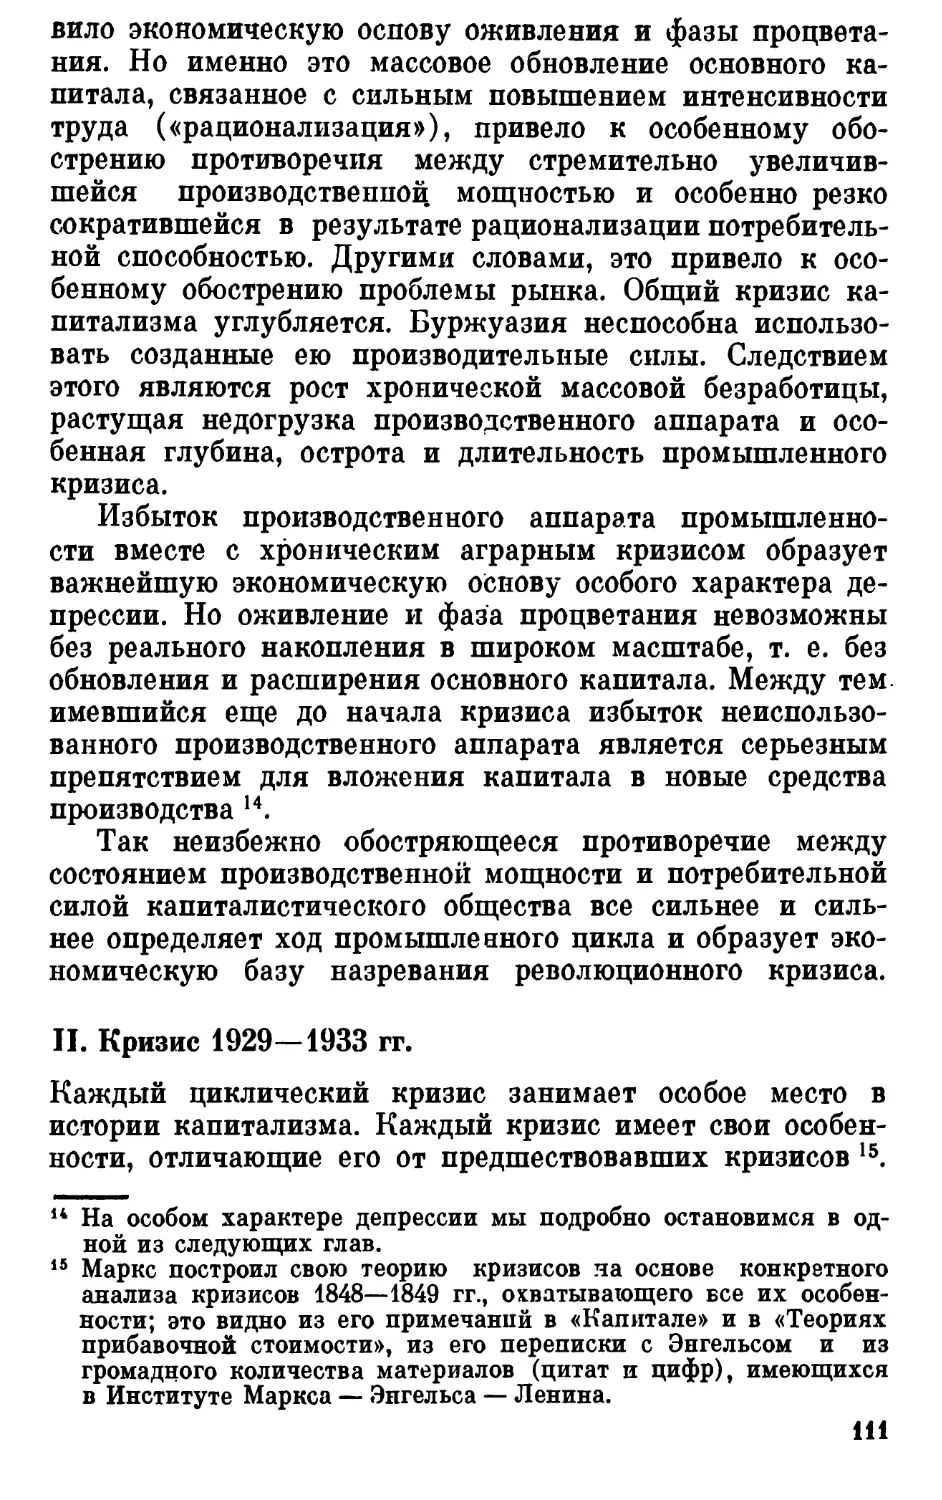 II. Кризис 1929 - 1933 гг.